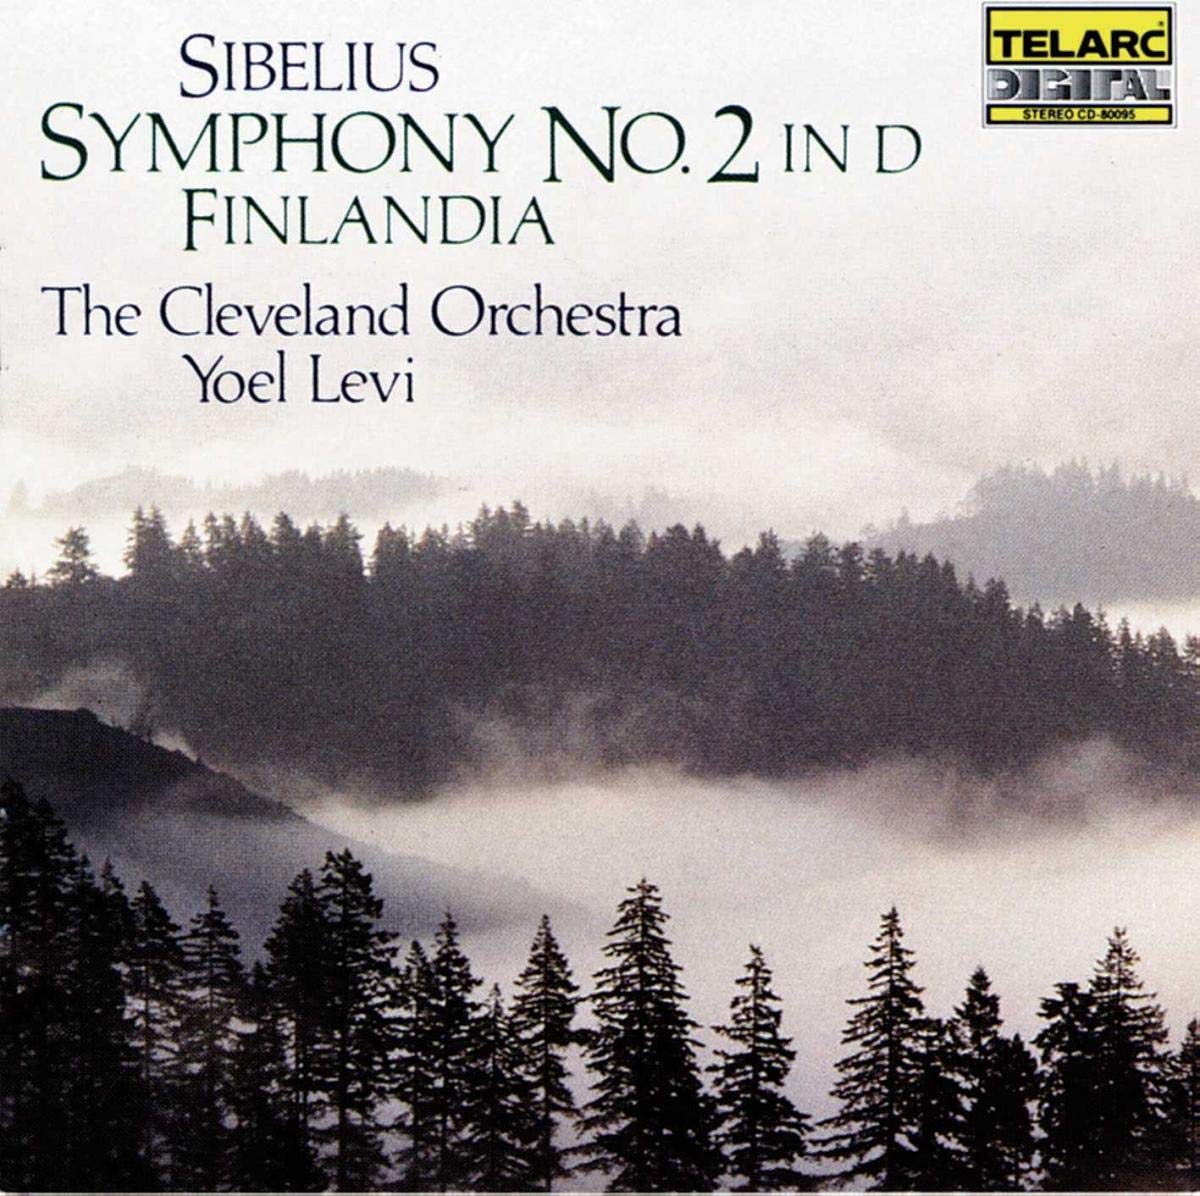 SIBELIUS: SYMPHONY NO. 2 IN D - Yoel Levi, Cleveland Orchestra